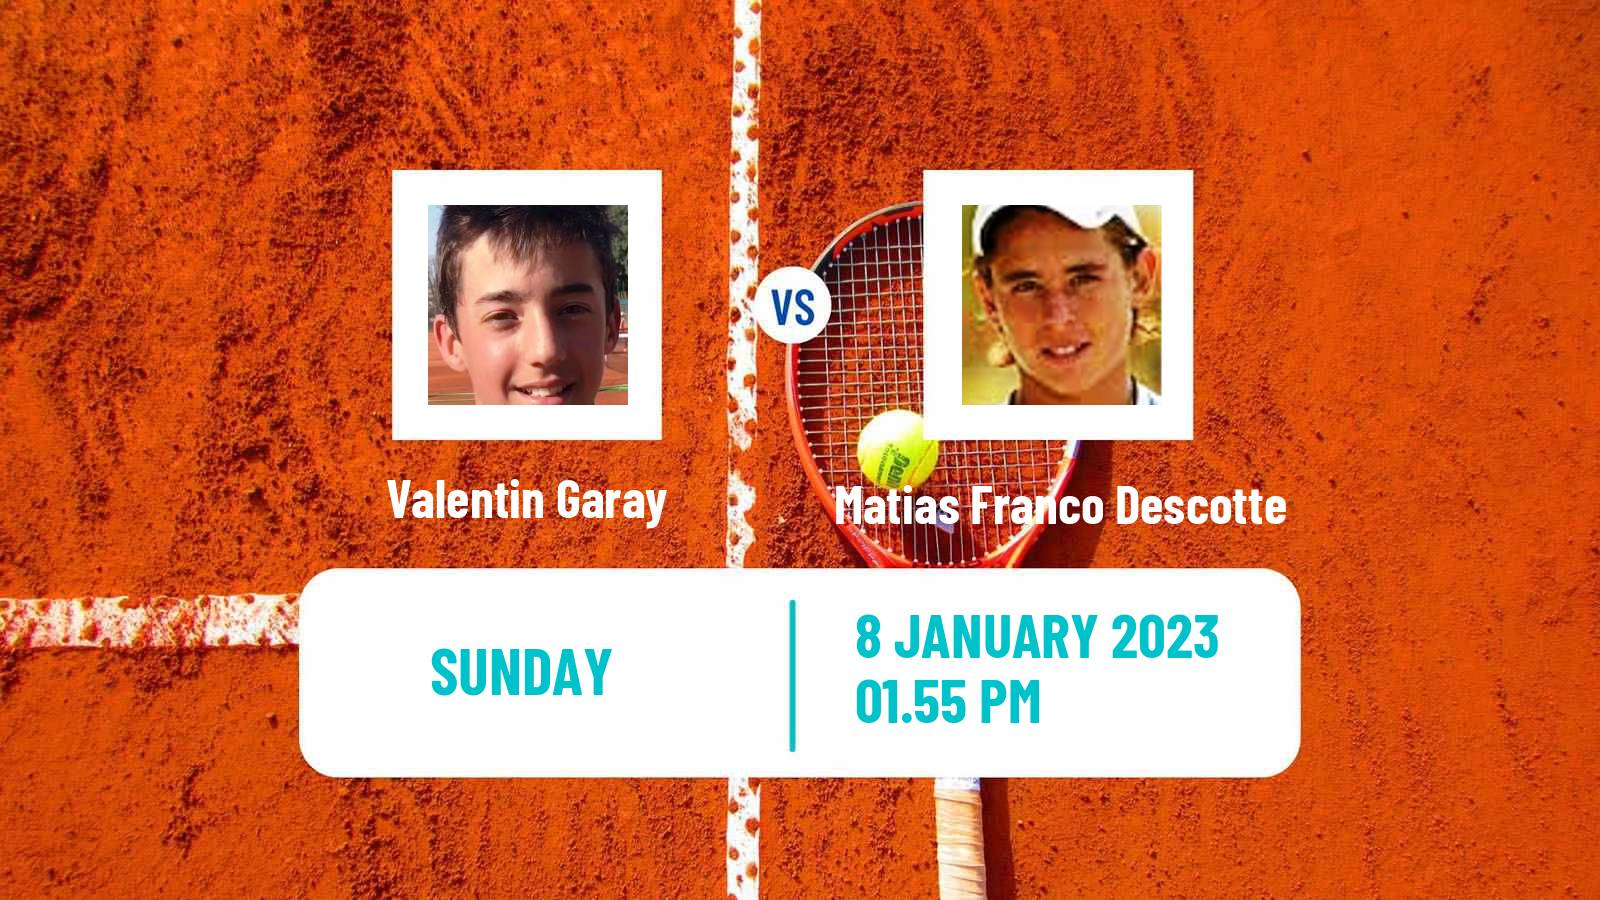 Tennis ATP Challenger Valentin Garay - Matias Franco Descotte